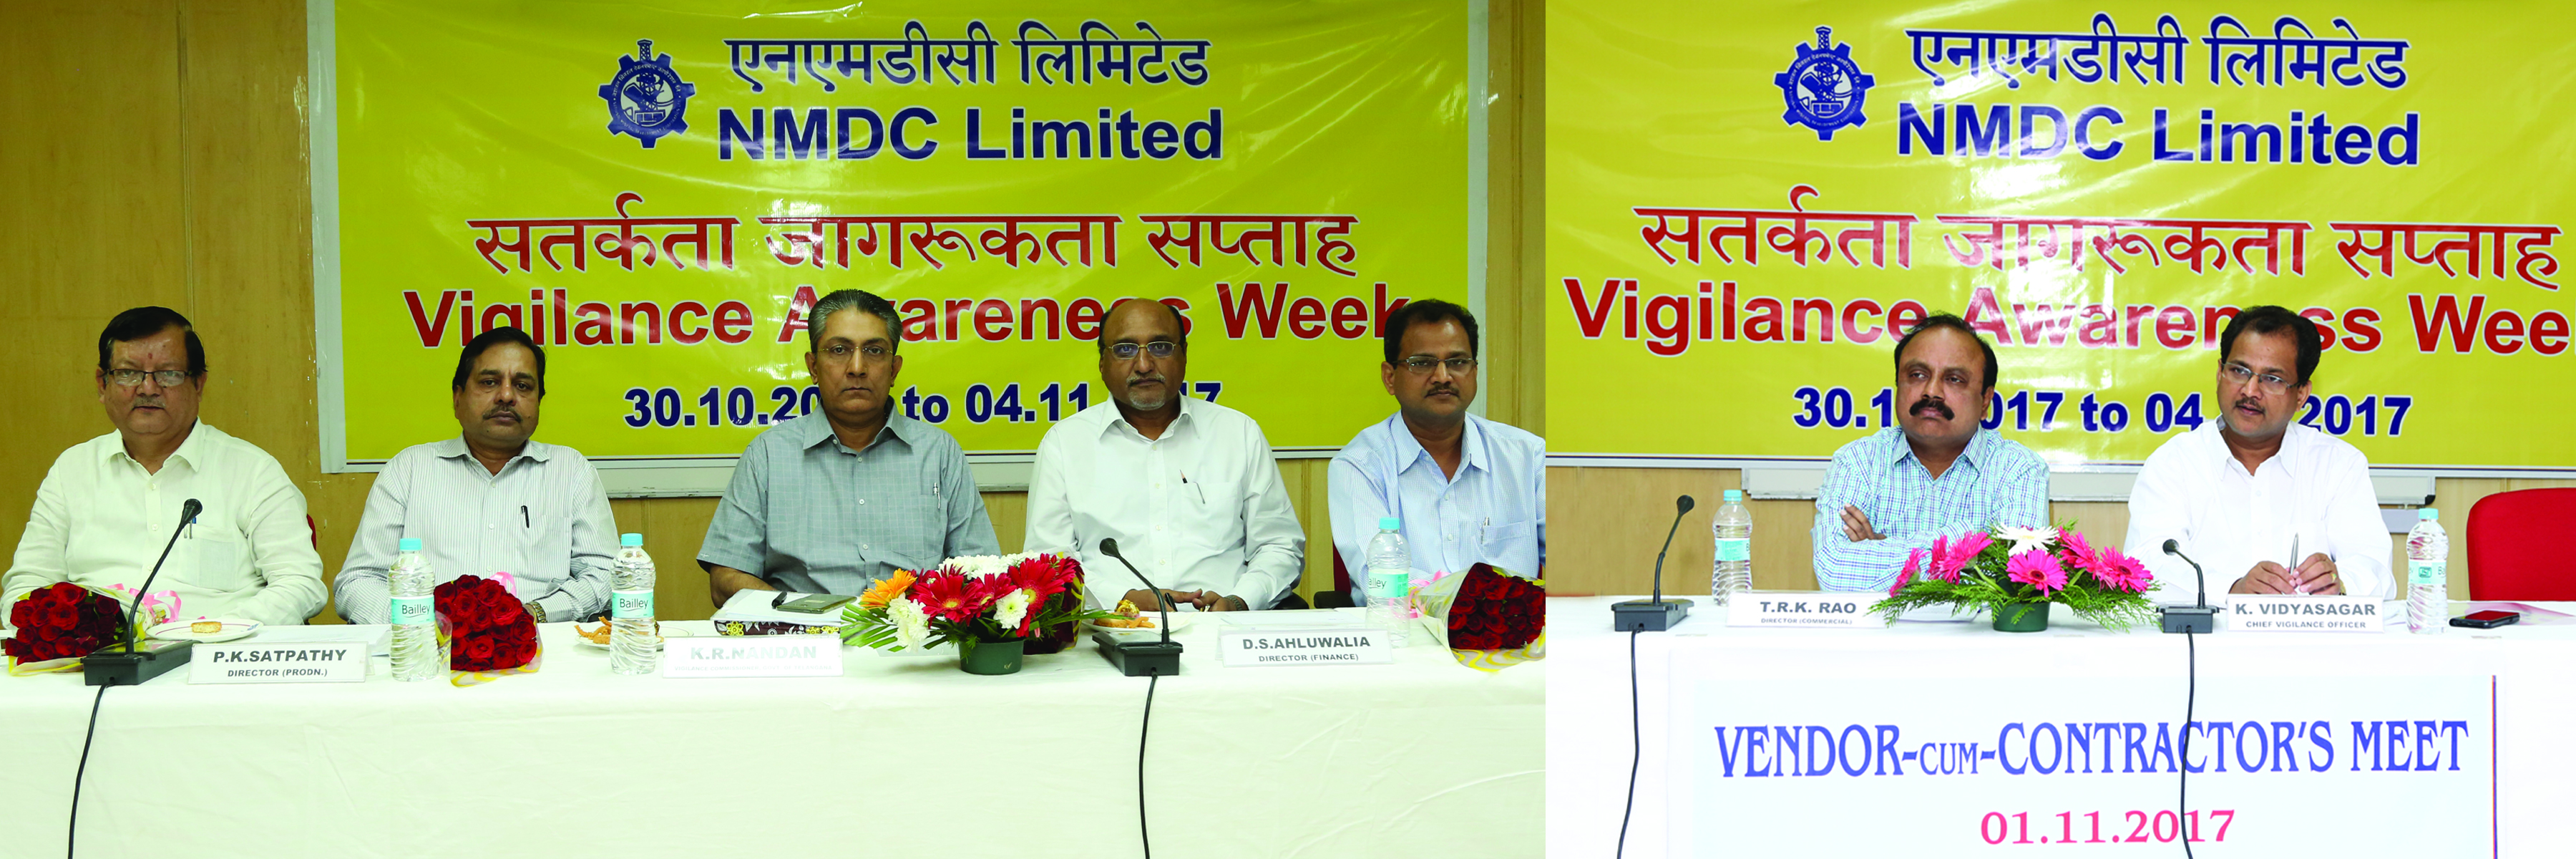 NMDC Vigilance Awareness Week Programmes